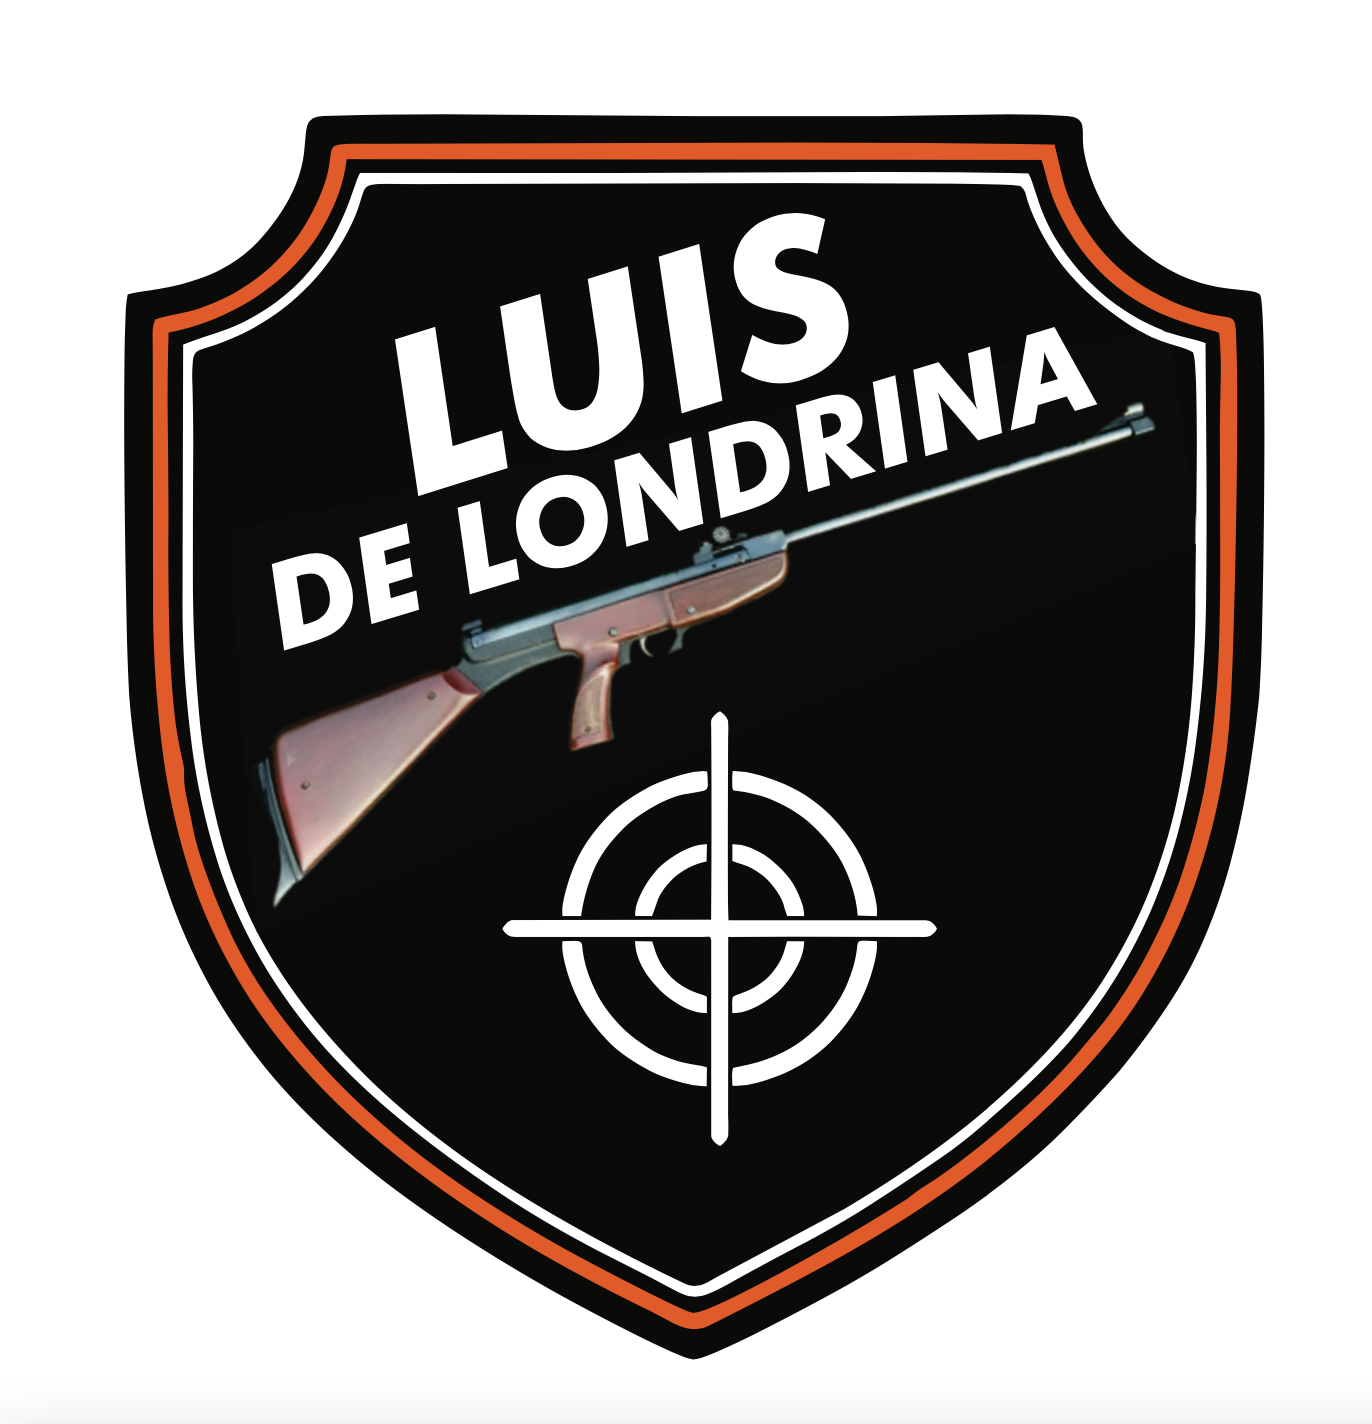 Luis de Londrina Carabinas